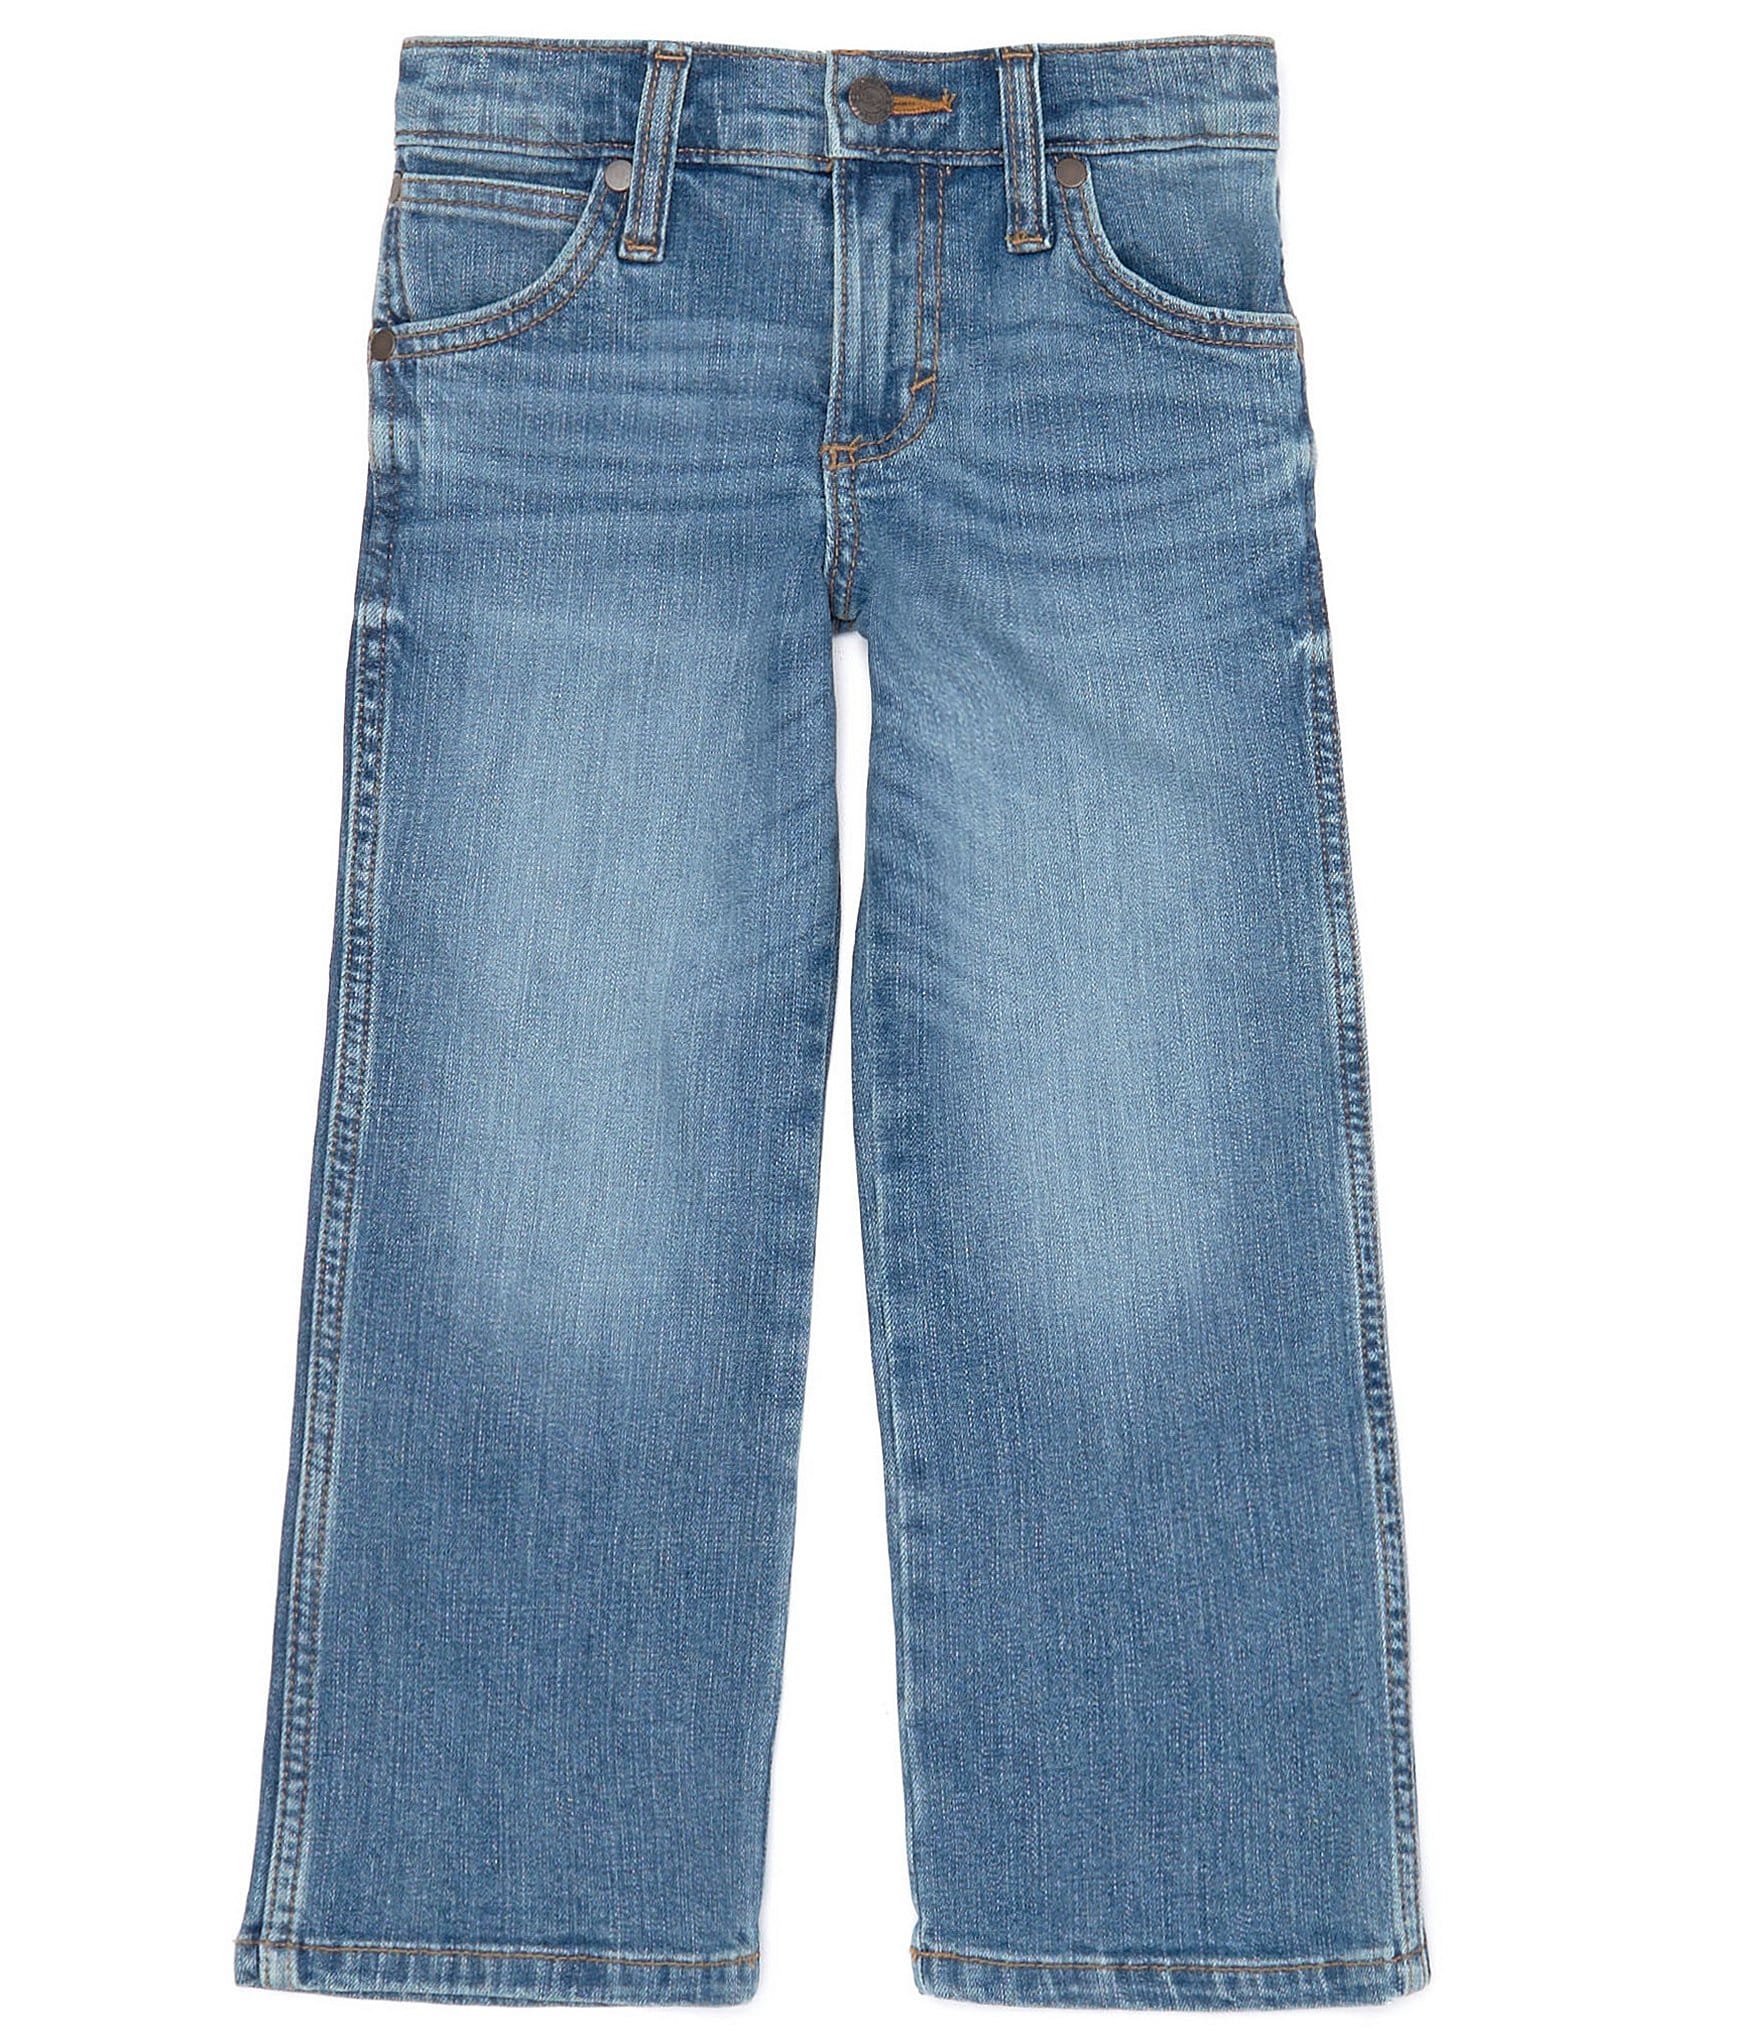 Wrangler Jeans - Buy Wrangler Jeans @Min 70% Off Online at Best Prices in  India